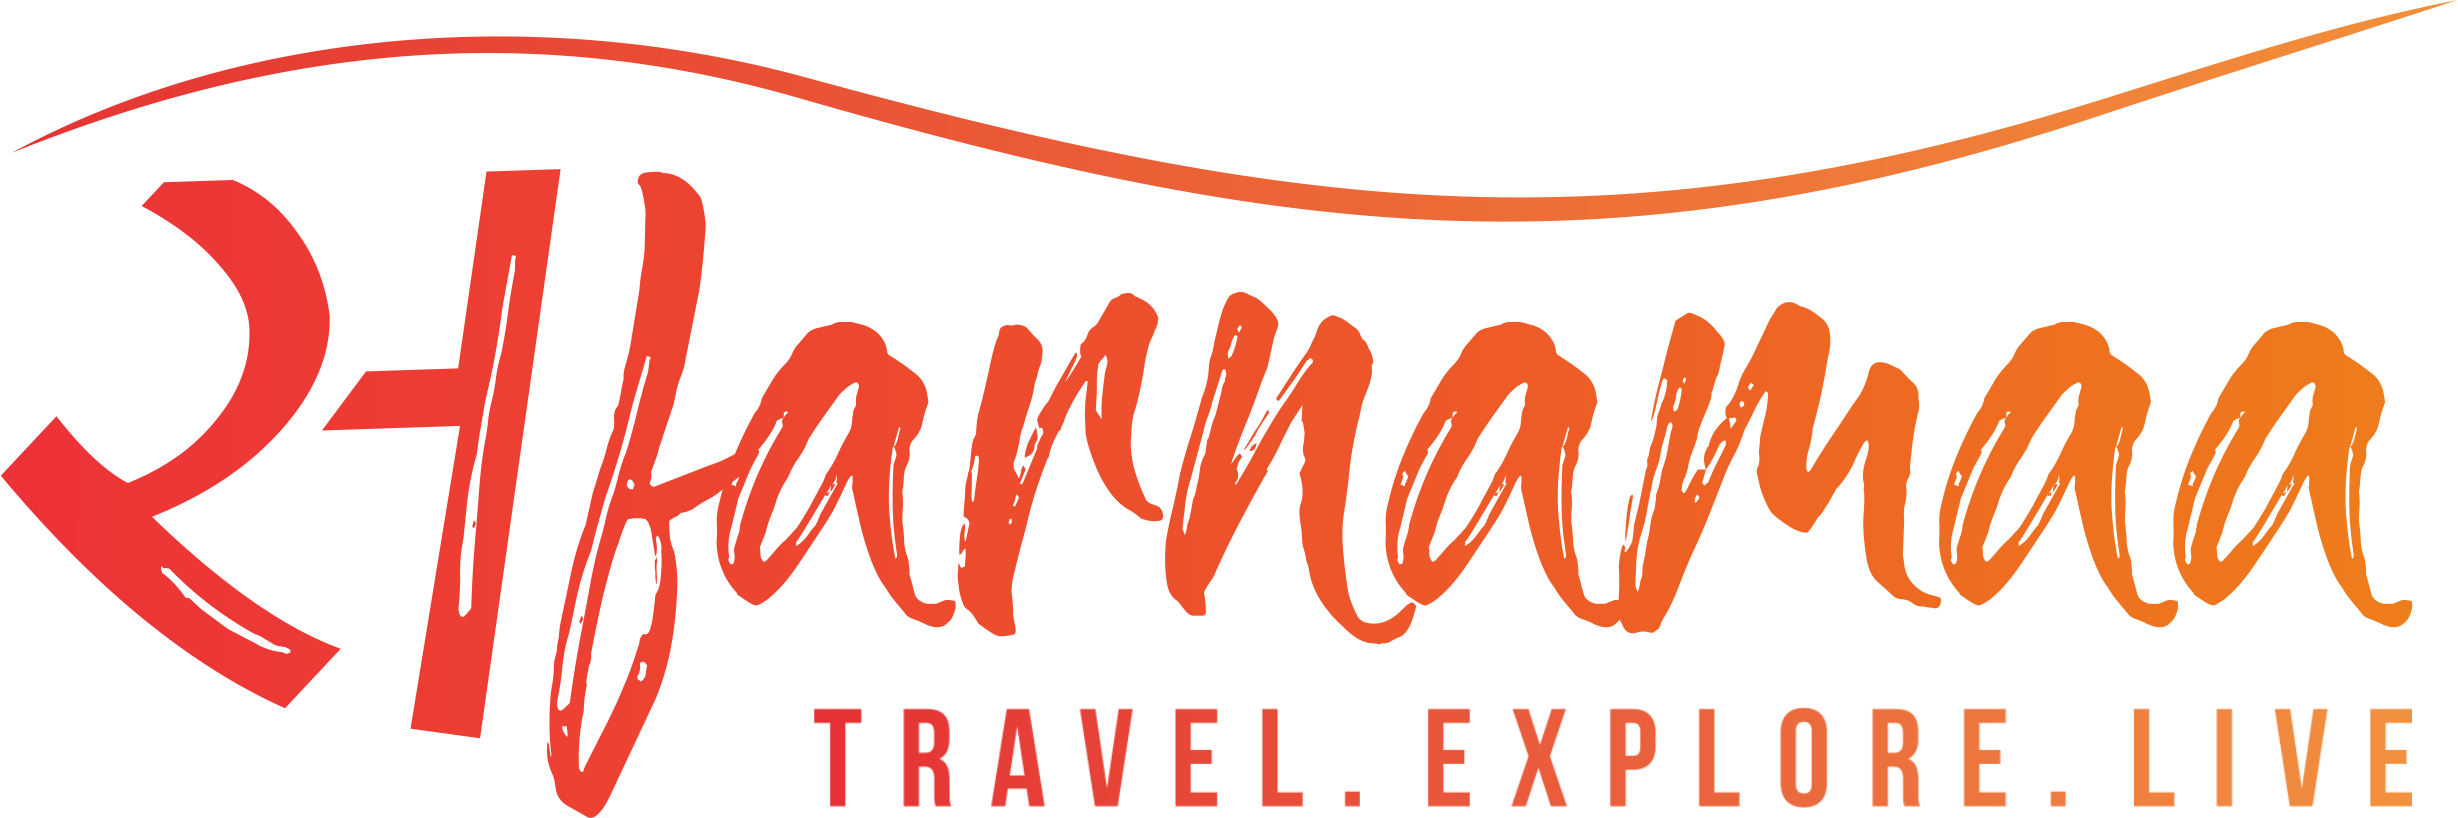 Safarnamaa – Travel. Explore. Live